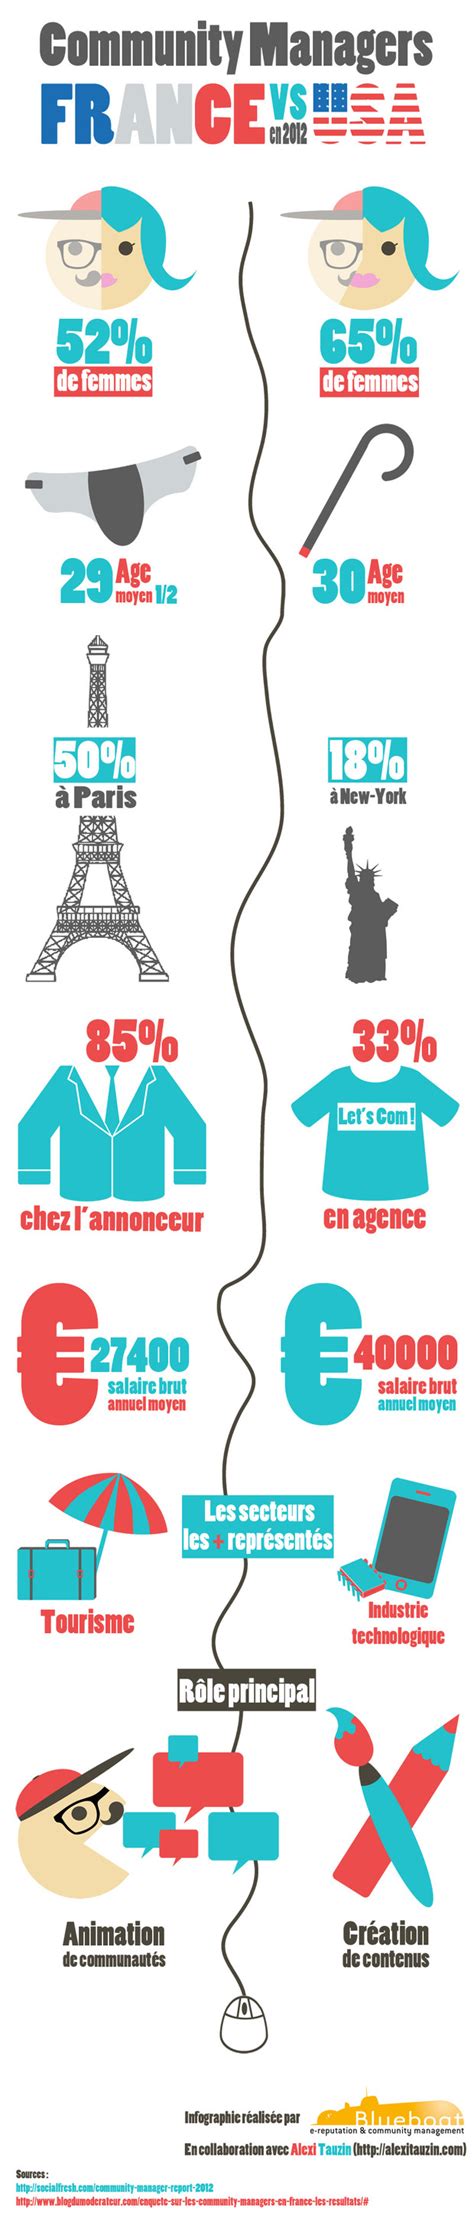 Community manager en Francia vs USA #infografia #infographic #socialmedia - TICs y Formación